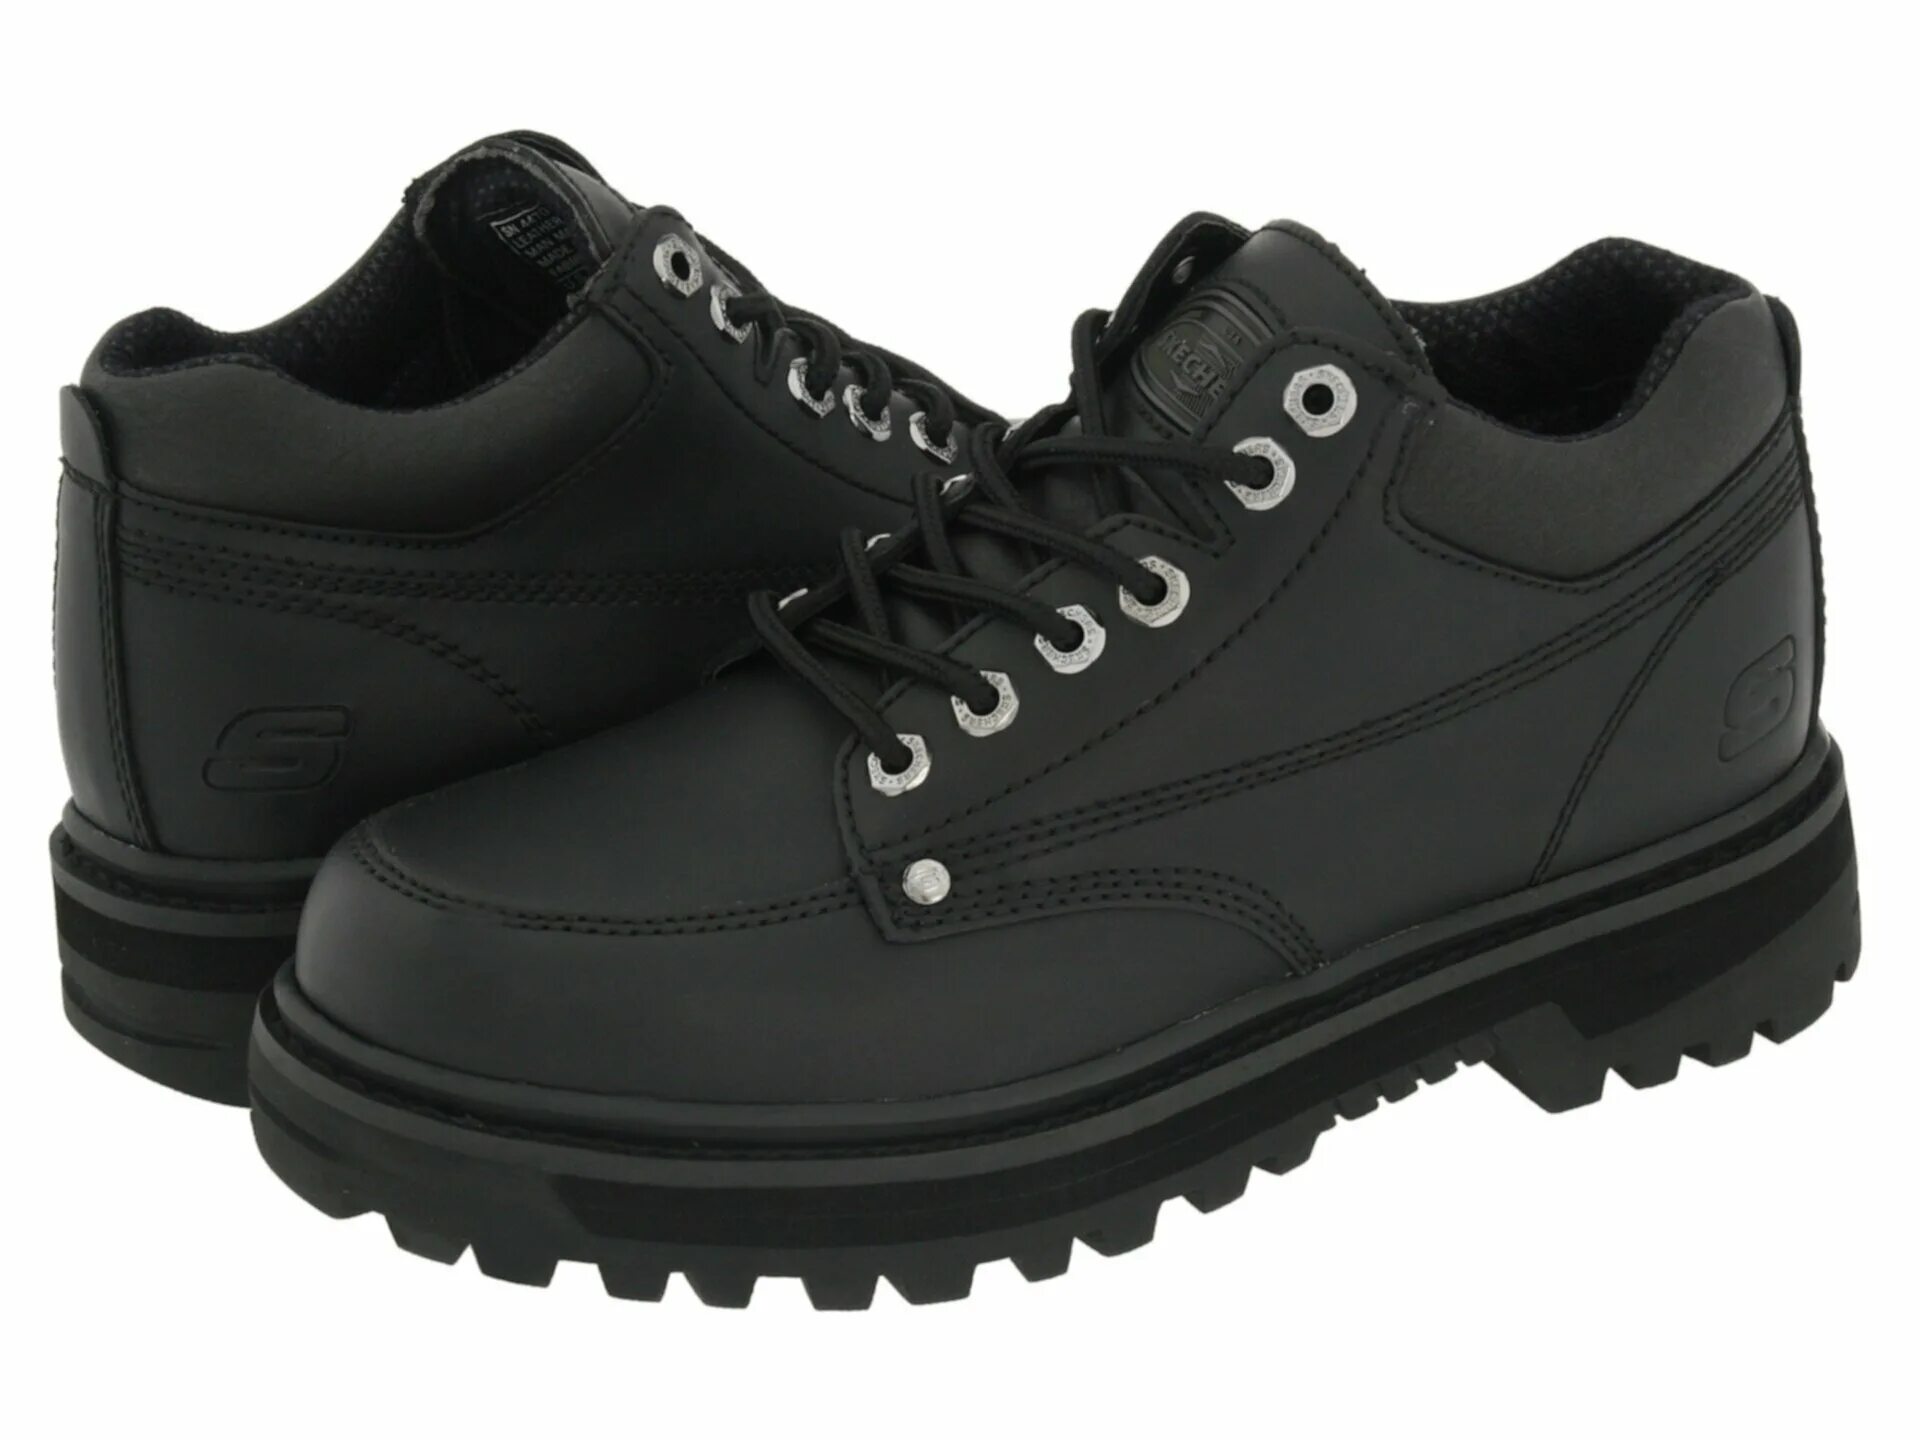 Ботинки Skechers мужские. Ботинки Skechers Harsen. Ботинки скетчерс мужские кожаные. Скетчерс ботинки кожаные черные. Скетчерсы обувь мужская